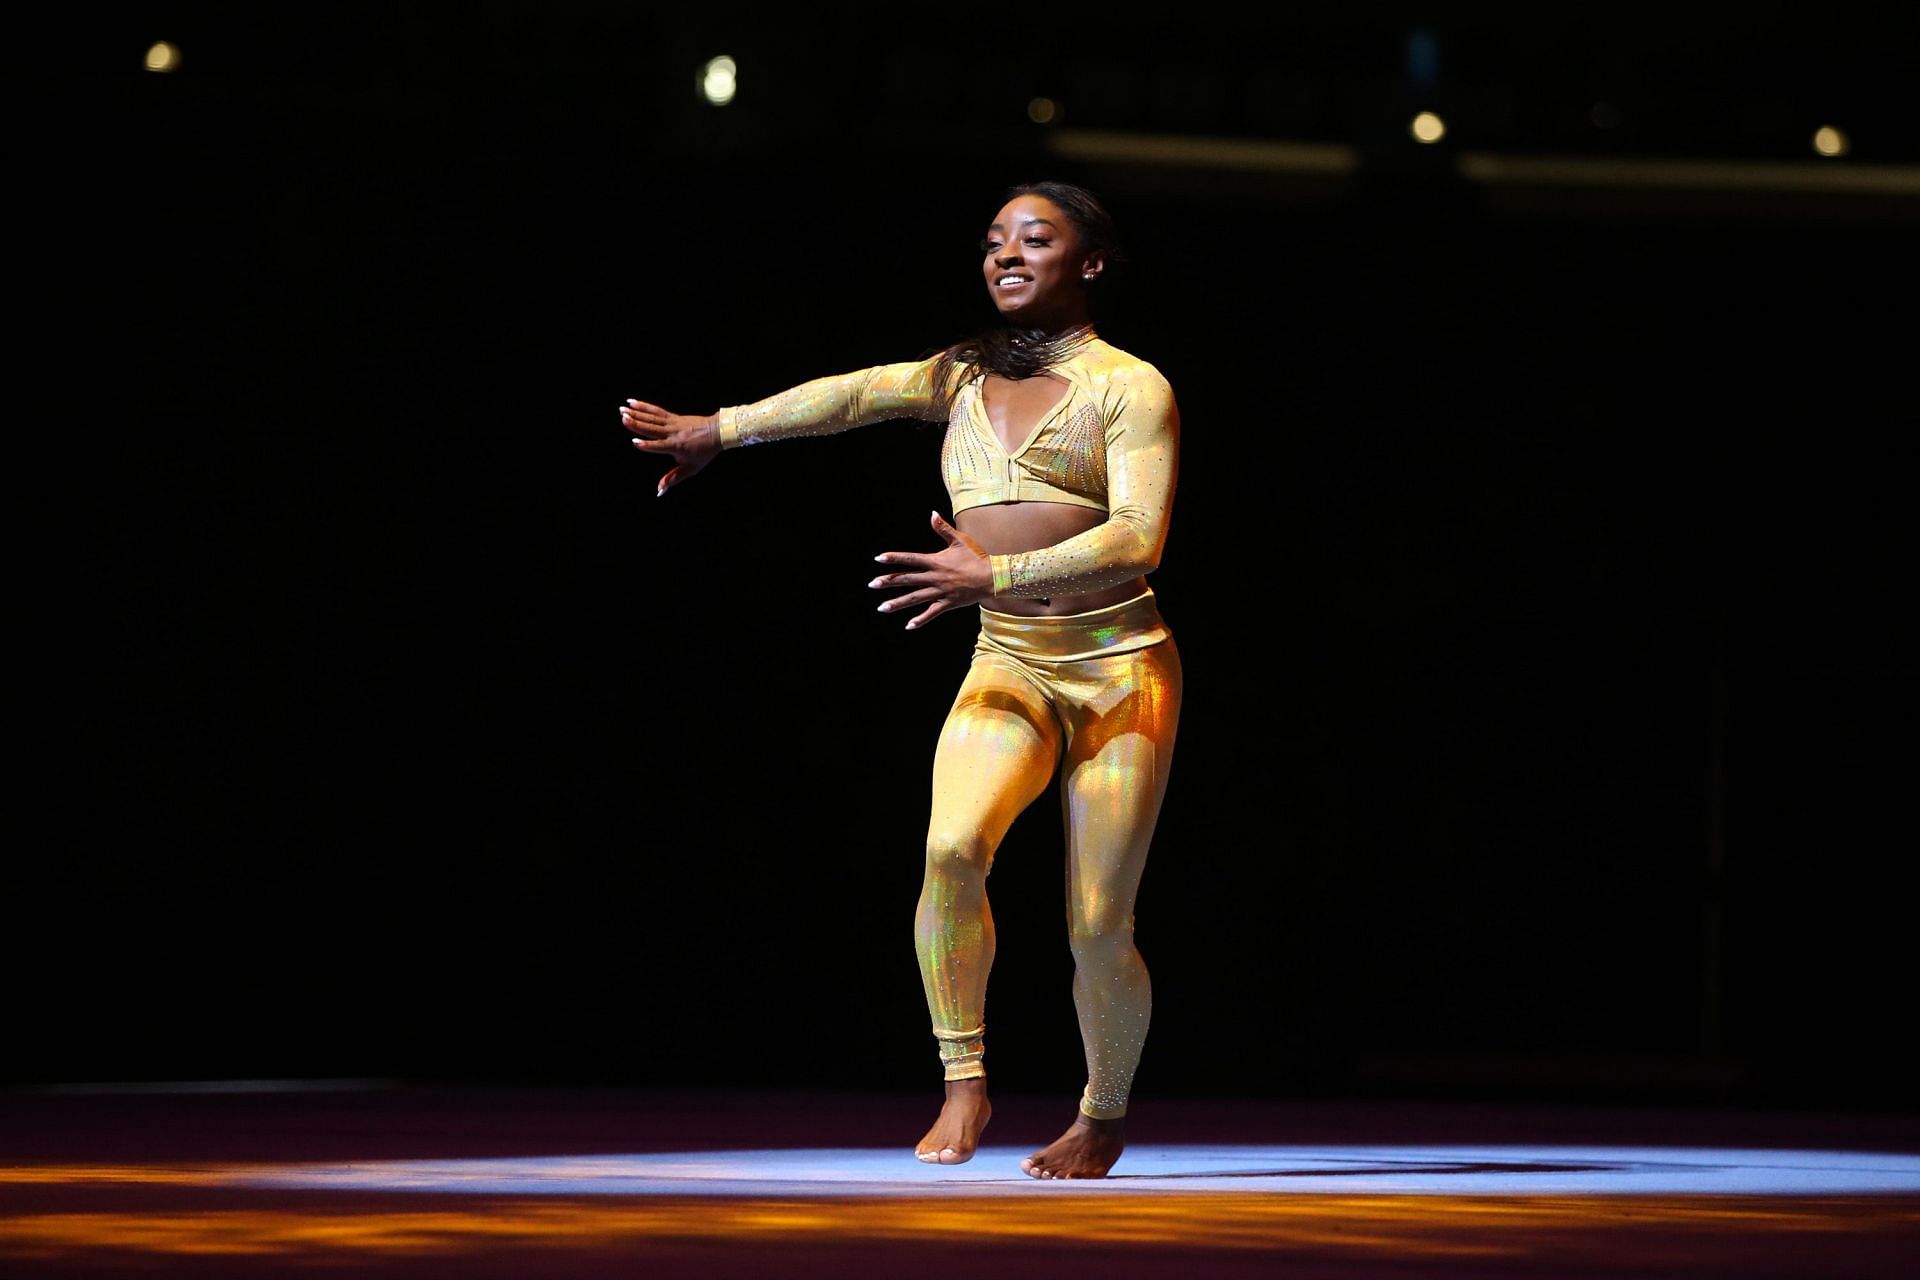 USA gymnast Simone Biles. (PC: Getty Images)